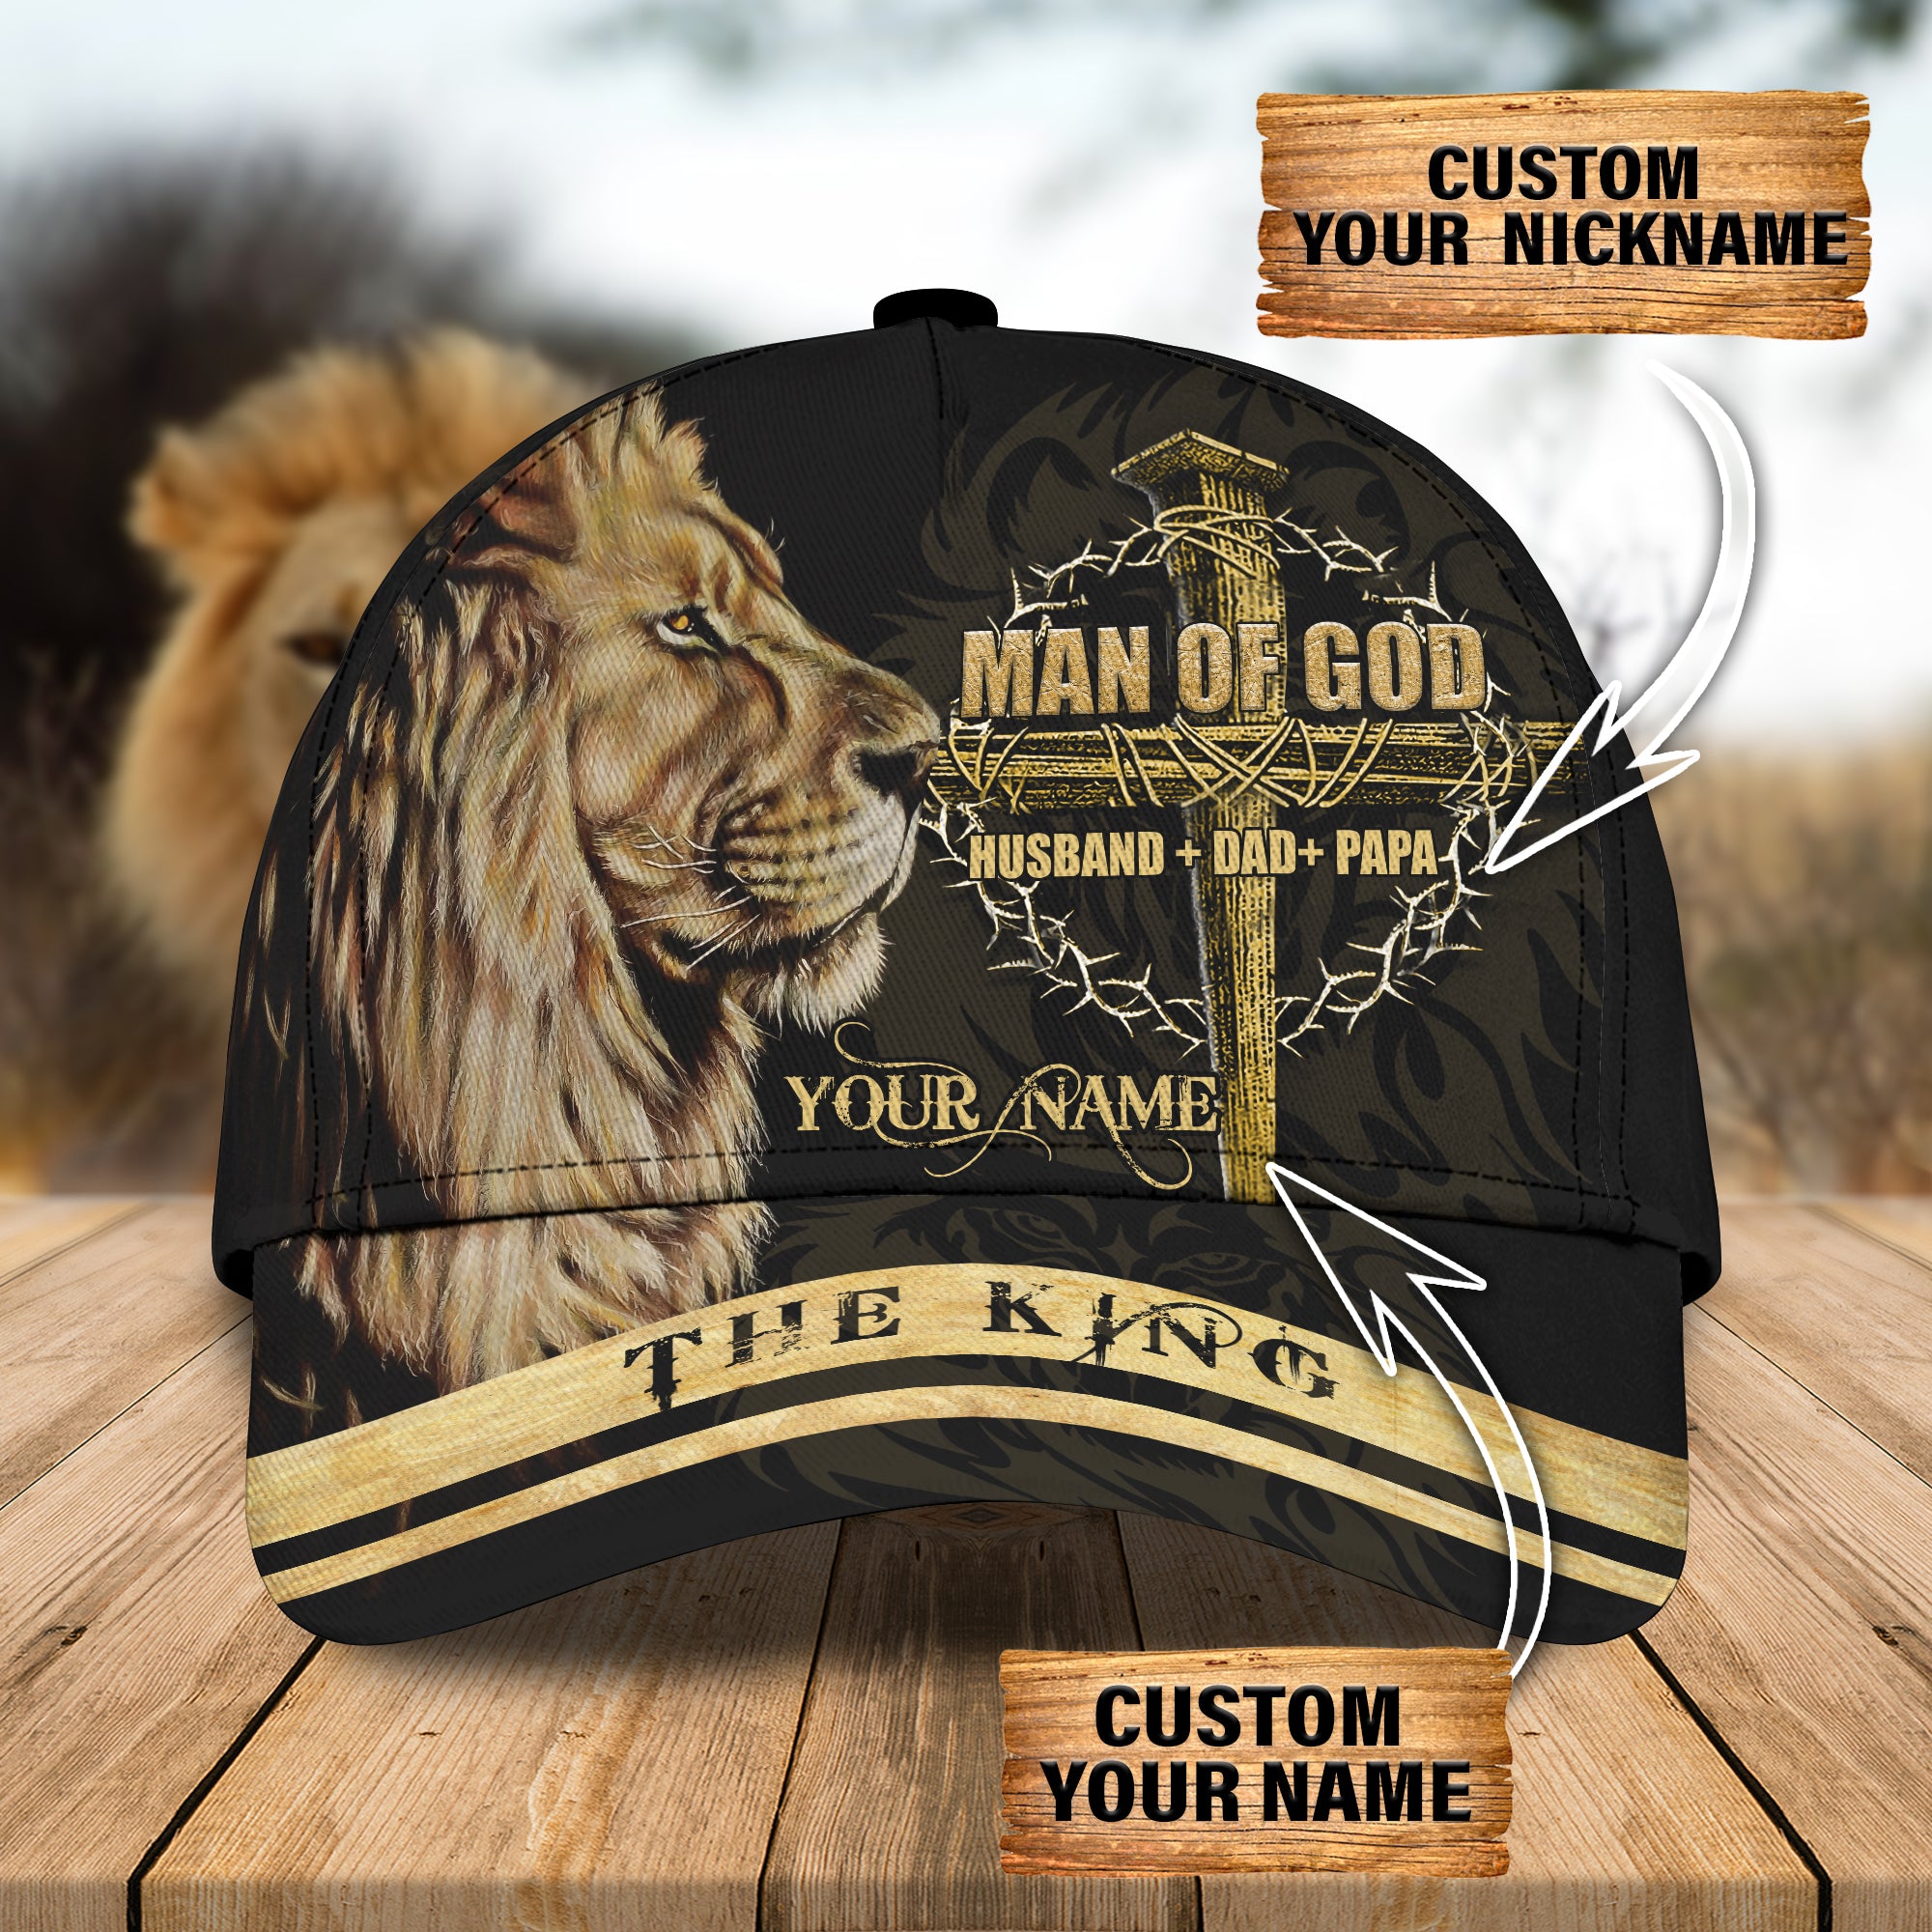 Man Of God - Personalized Name Cap 17 - Bhn97 6